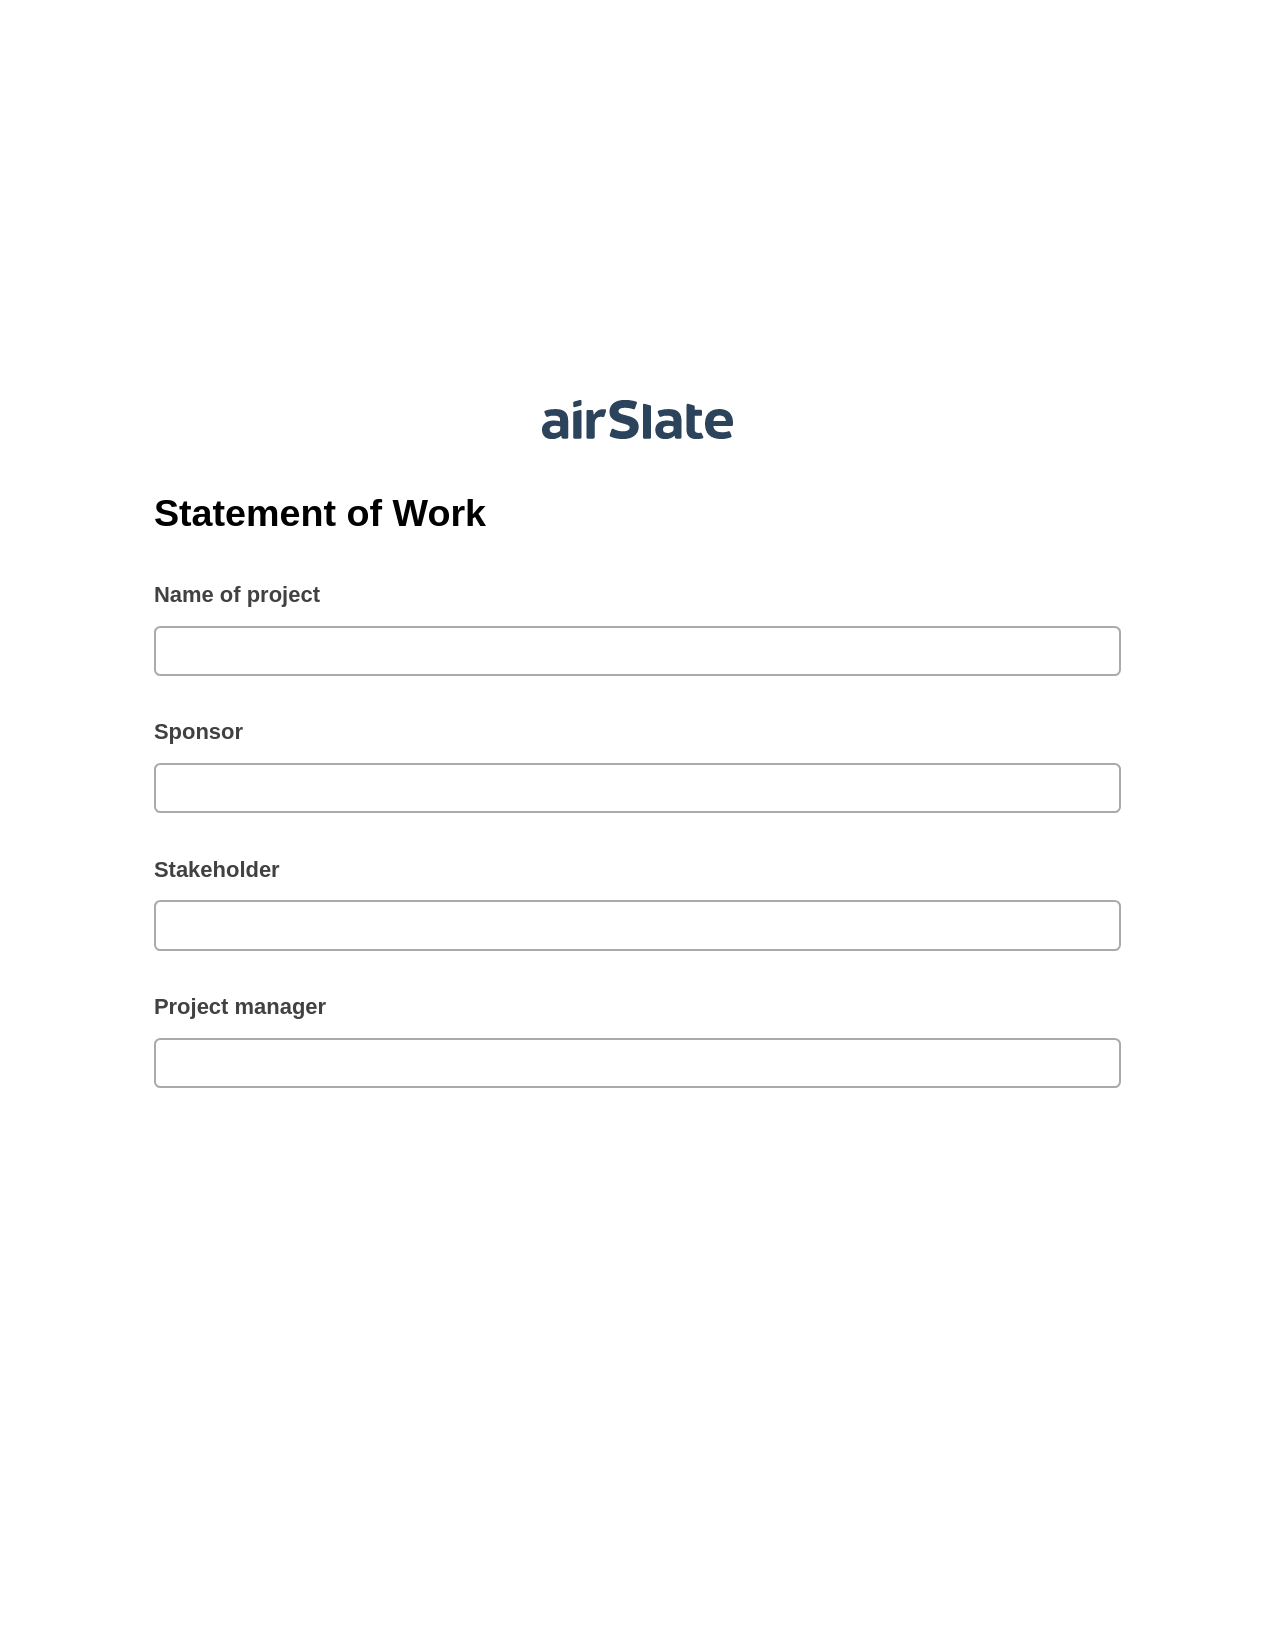 Multirole Statement of Work Pre-fill from CSV File Bot, Invoke Salesforce Process Bot, Archive to SharePoint Folder Bot